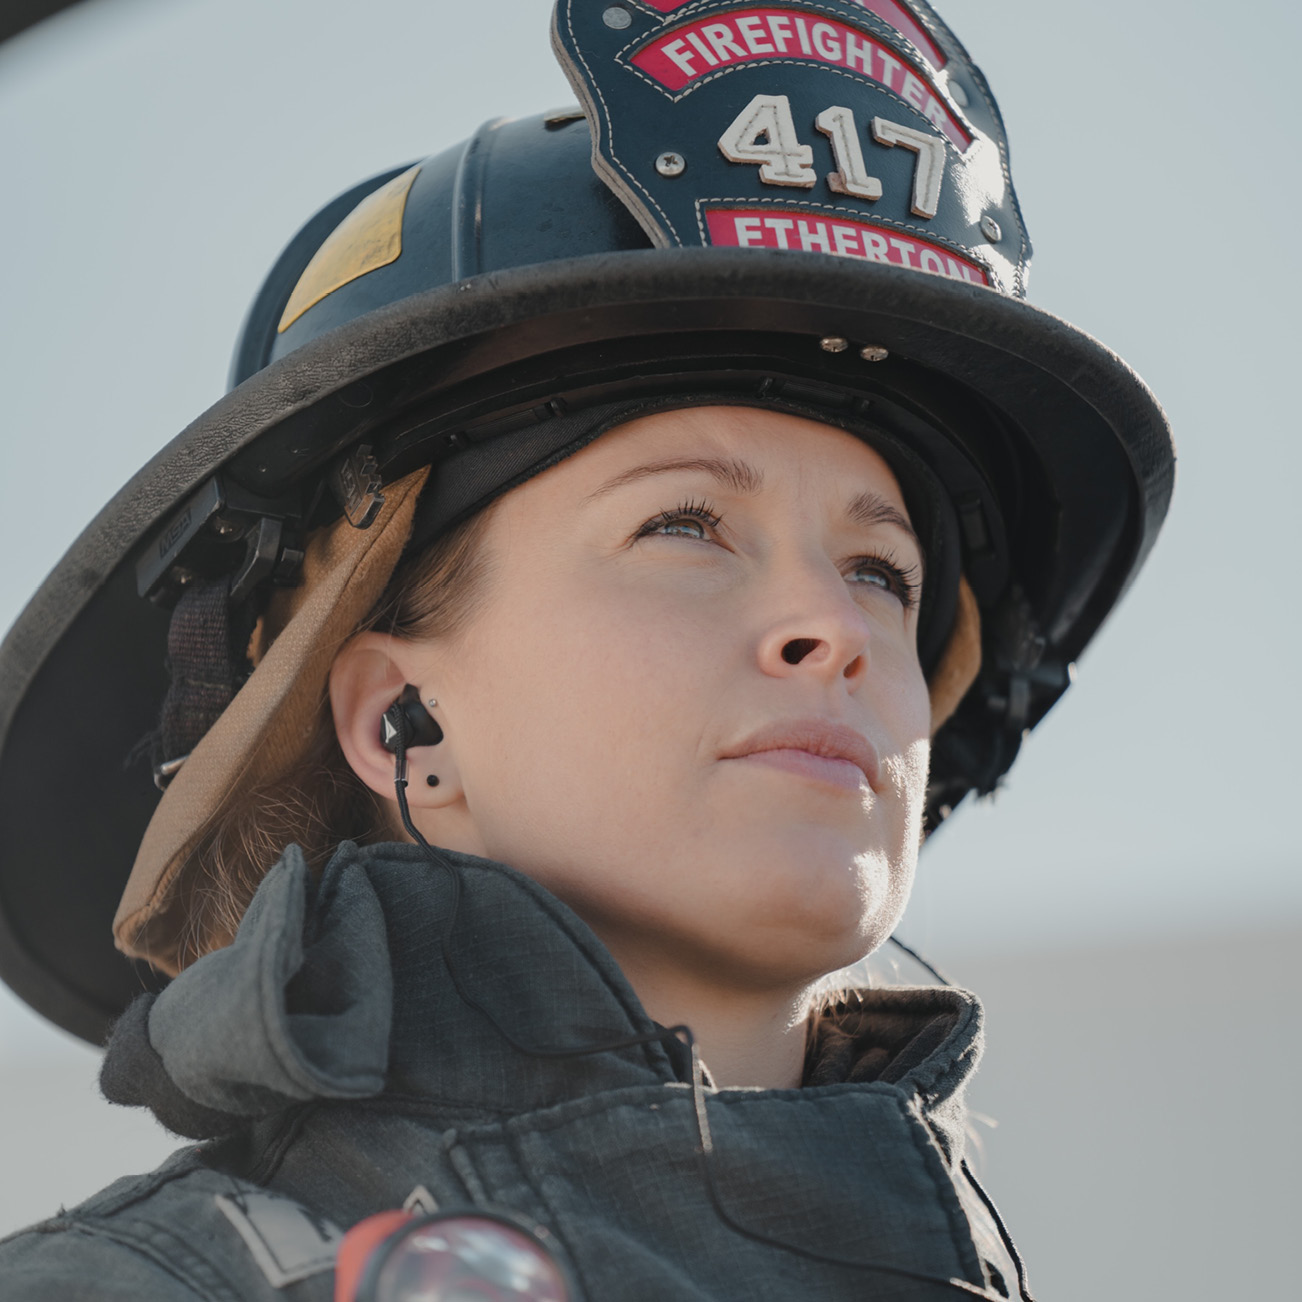 Female fire chief